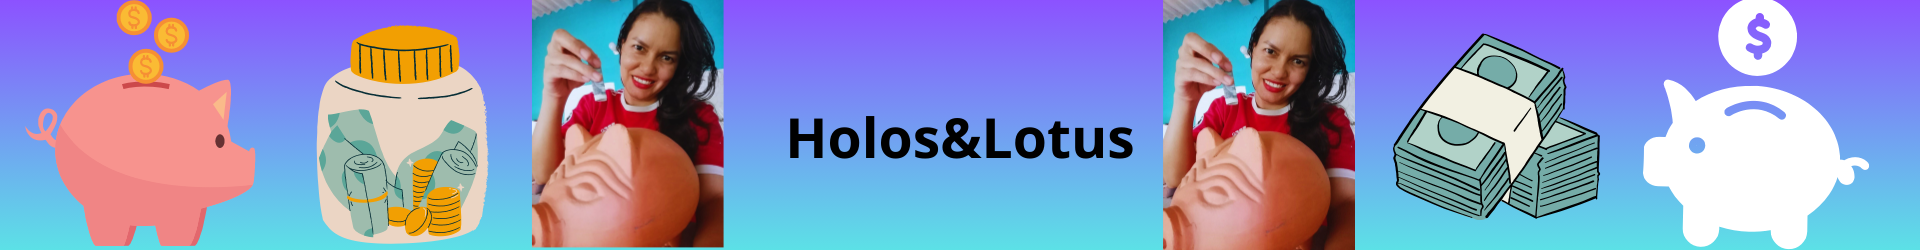 Holos&Lotus.png